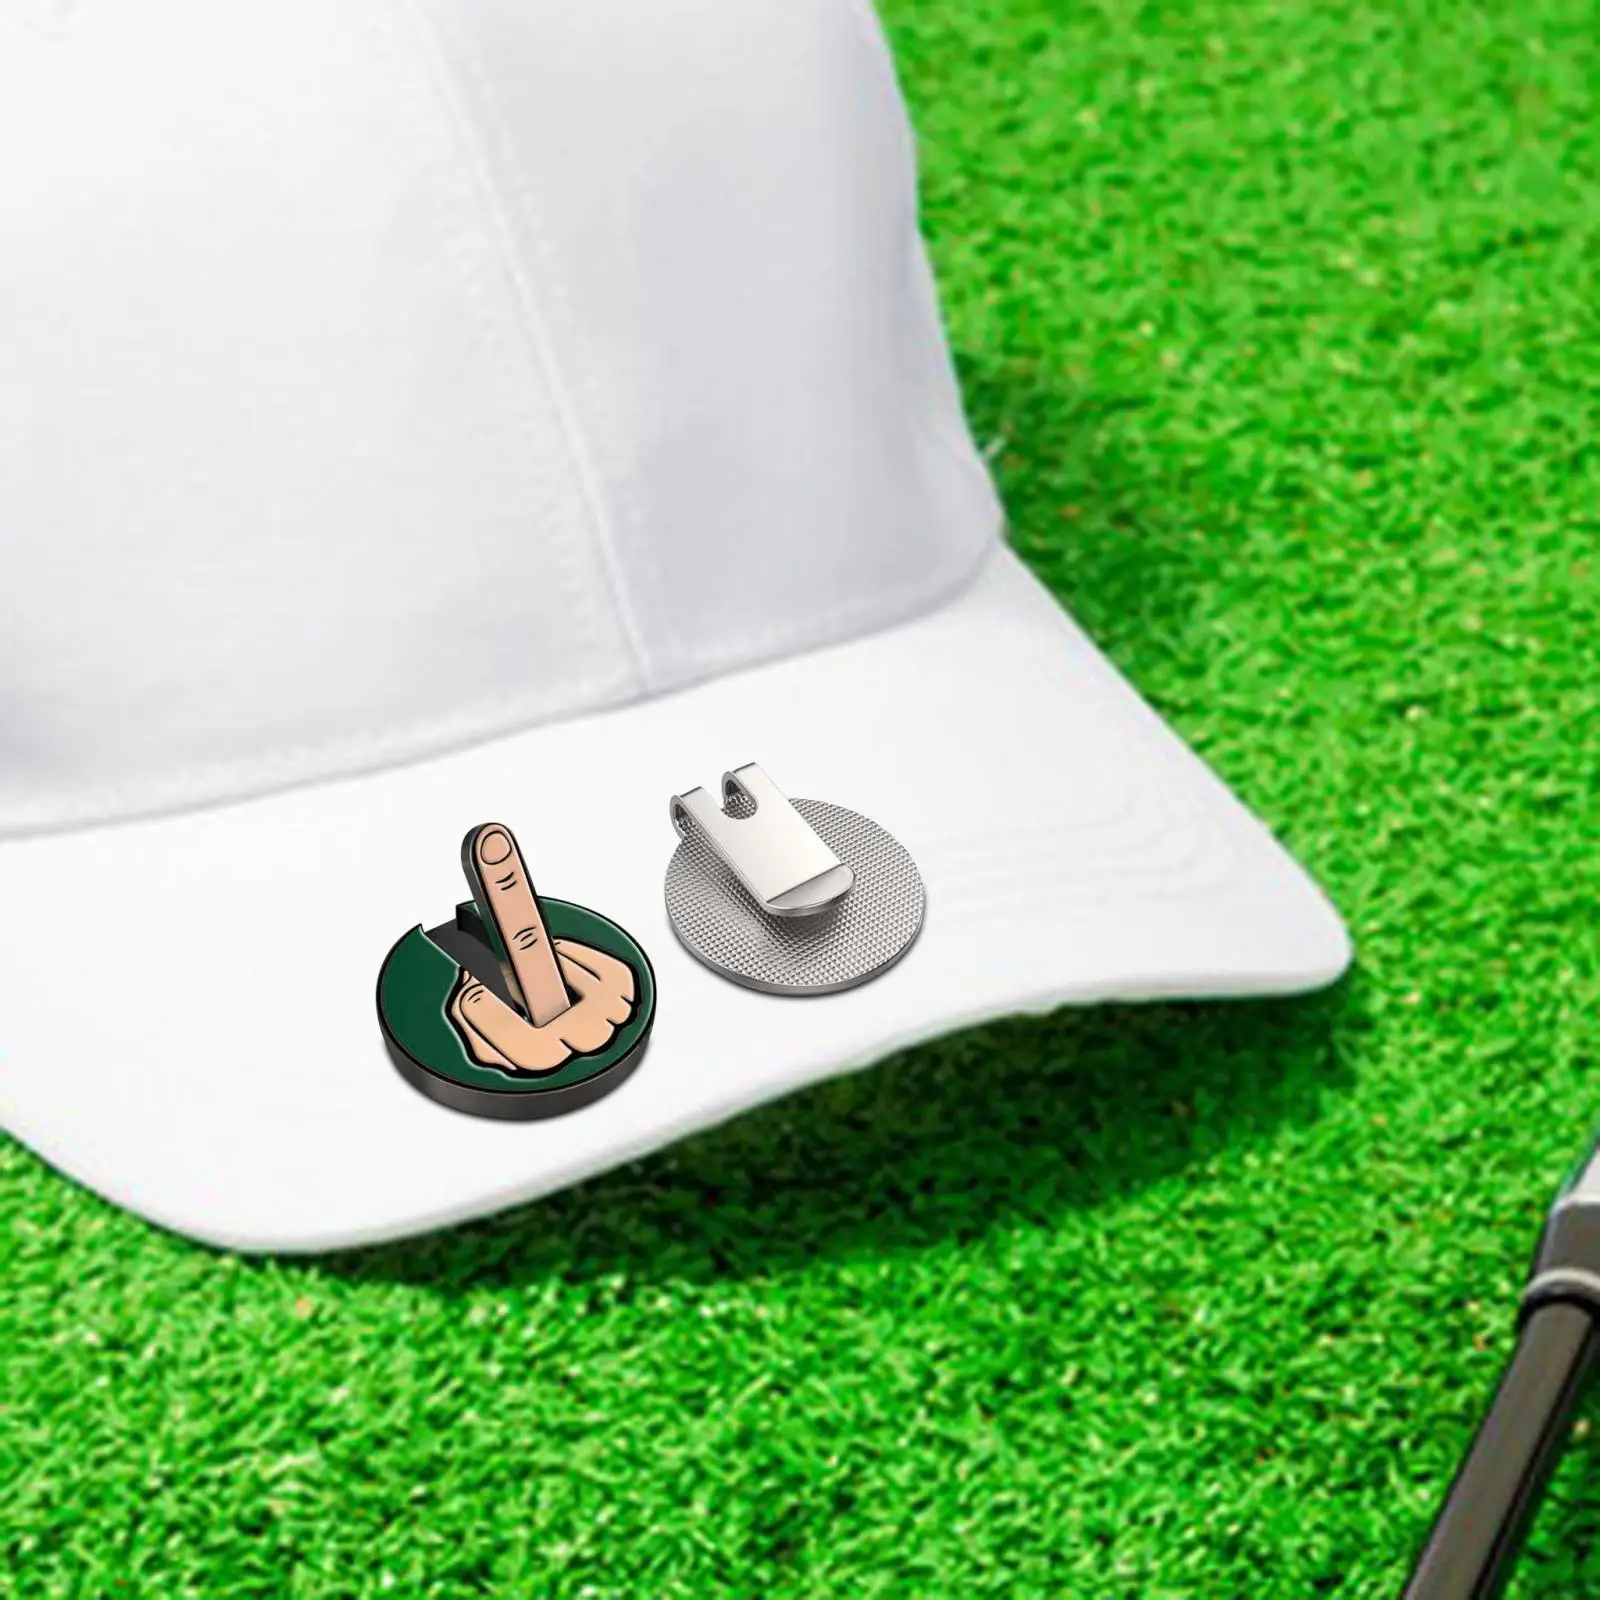 Middle Finger Theme Golf Ball Marker Vibrant Colors Women Men Golf Accessories